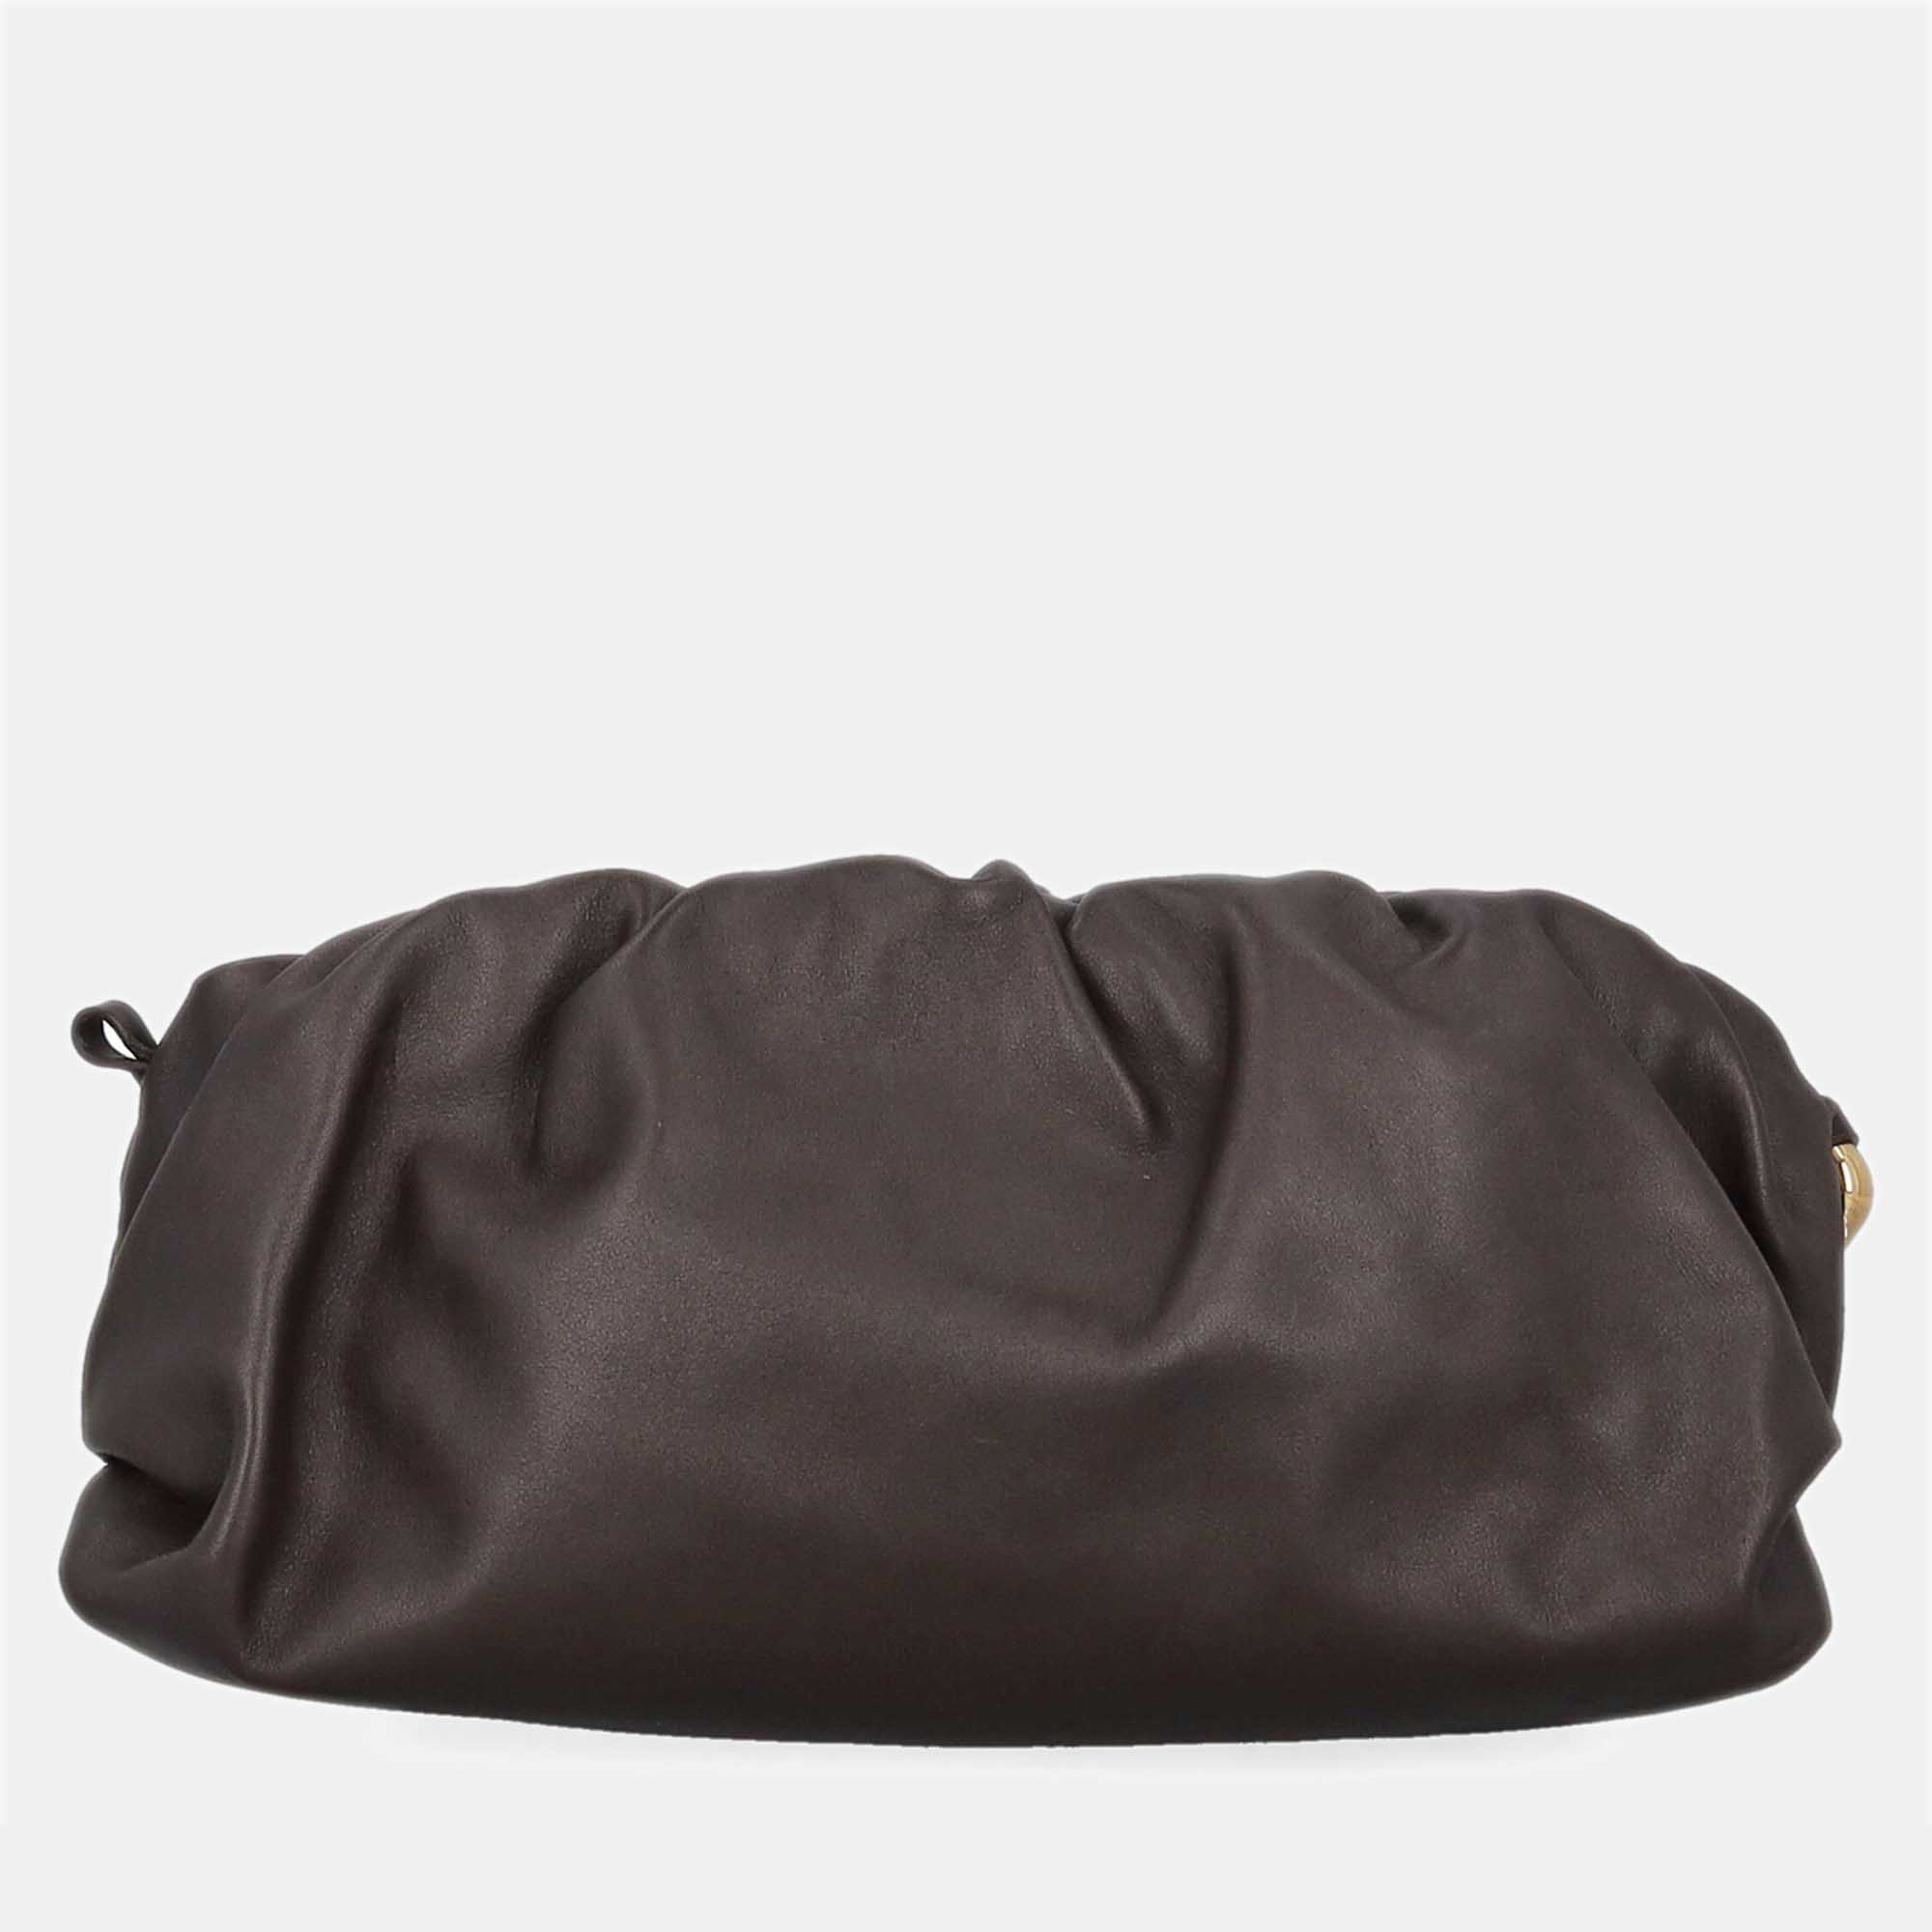 Bottega Veneta  Women's Leather Handbag - Brown - One Size